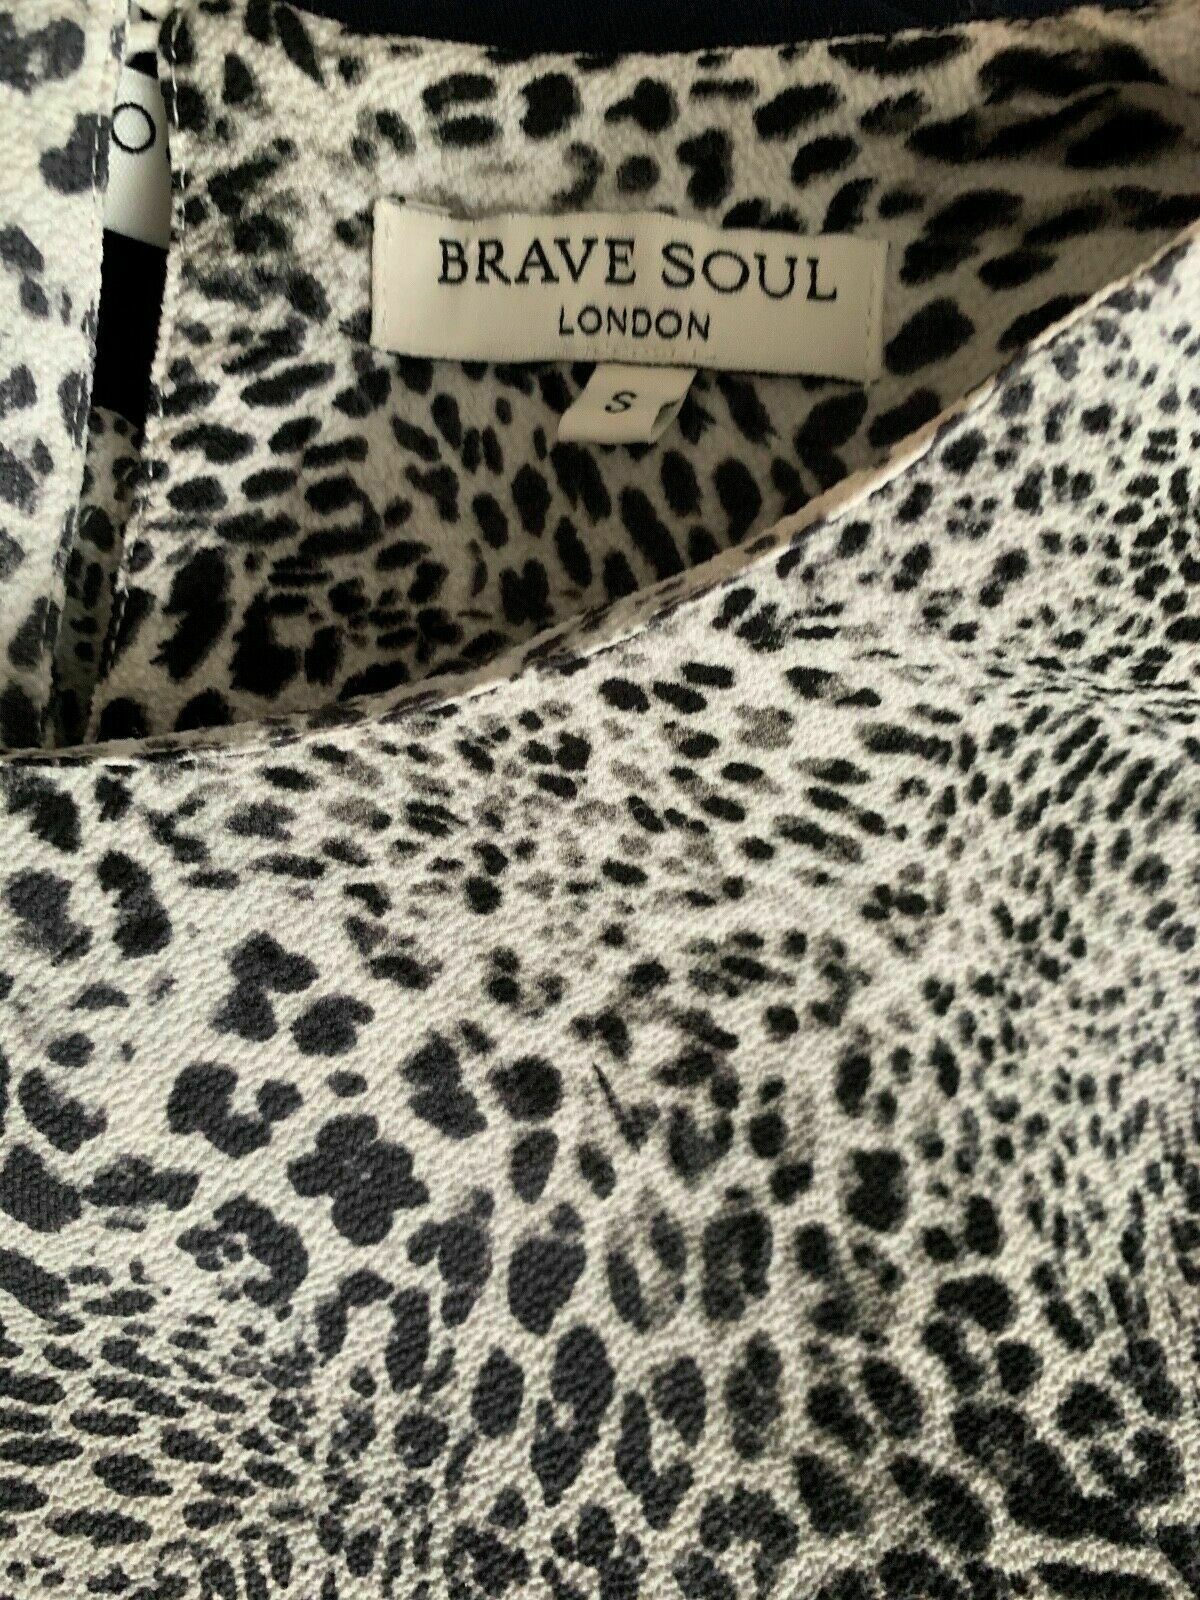 Brave Soul Animal Print Blouse Size S Ruffle